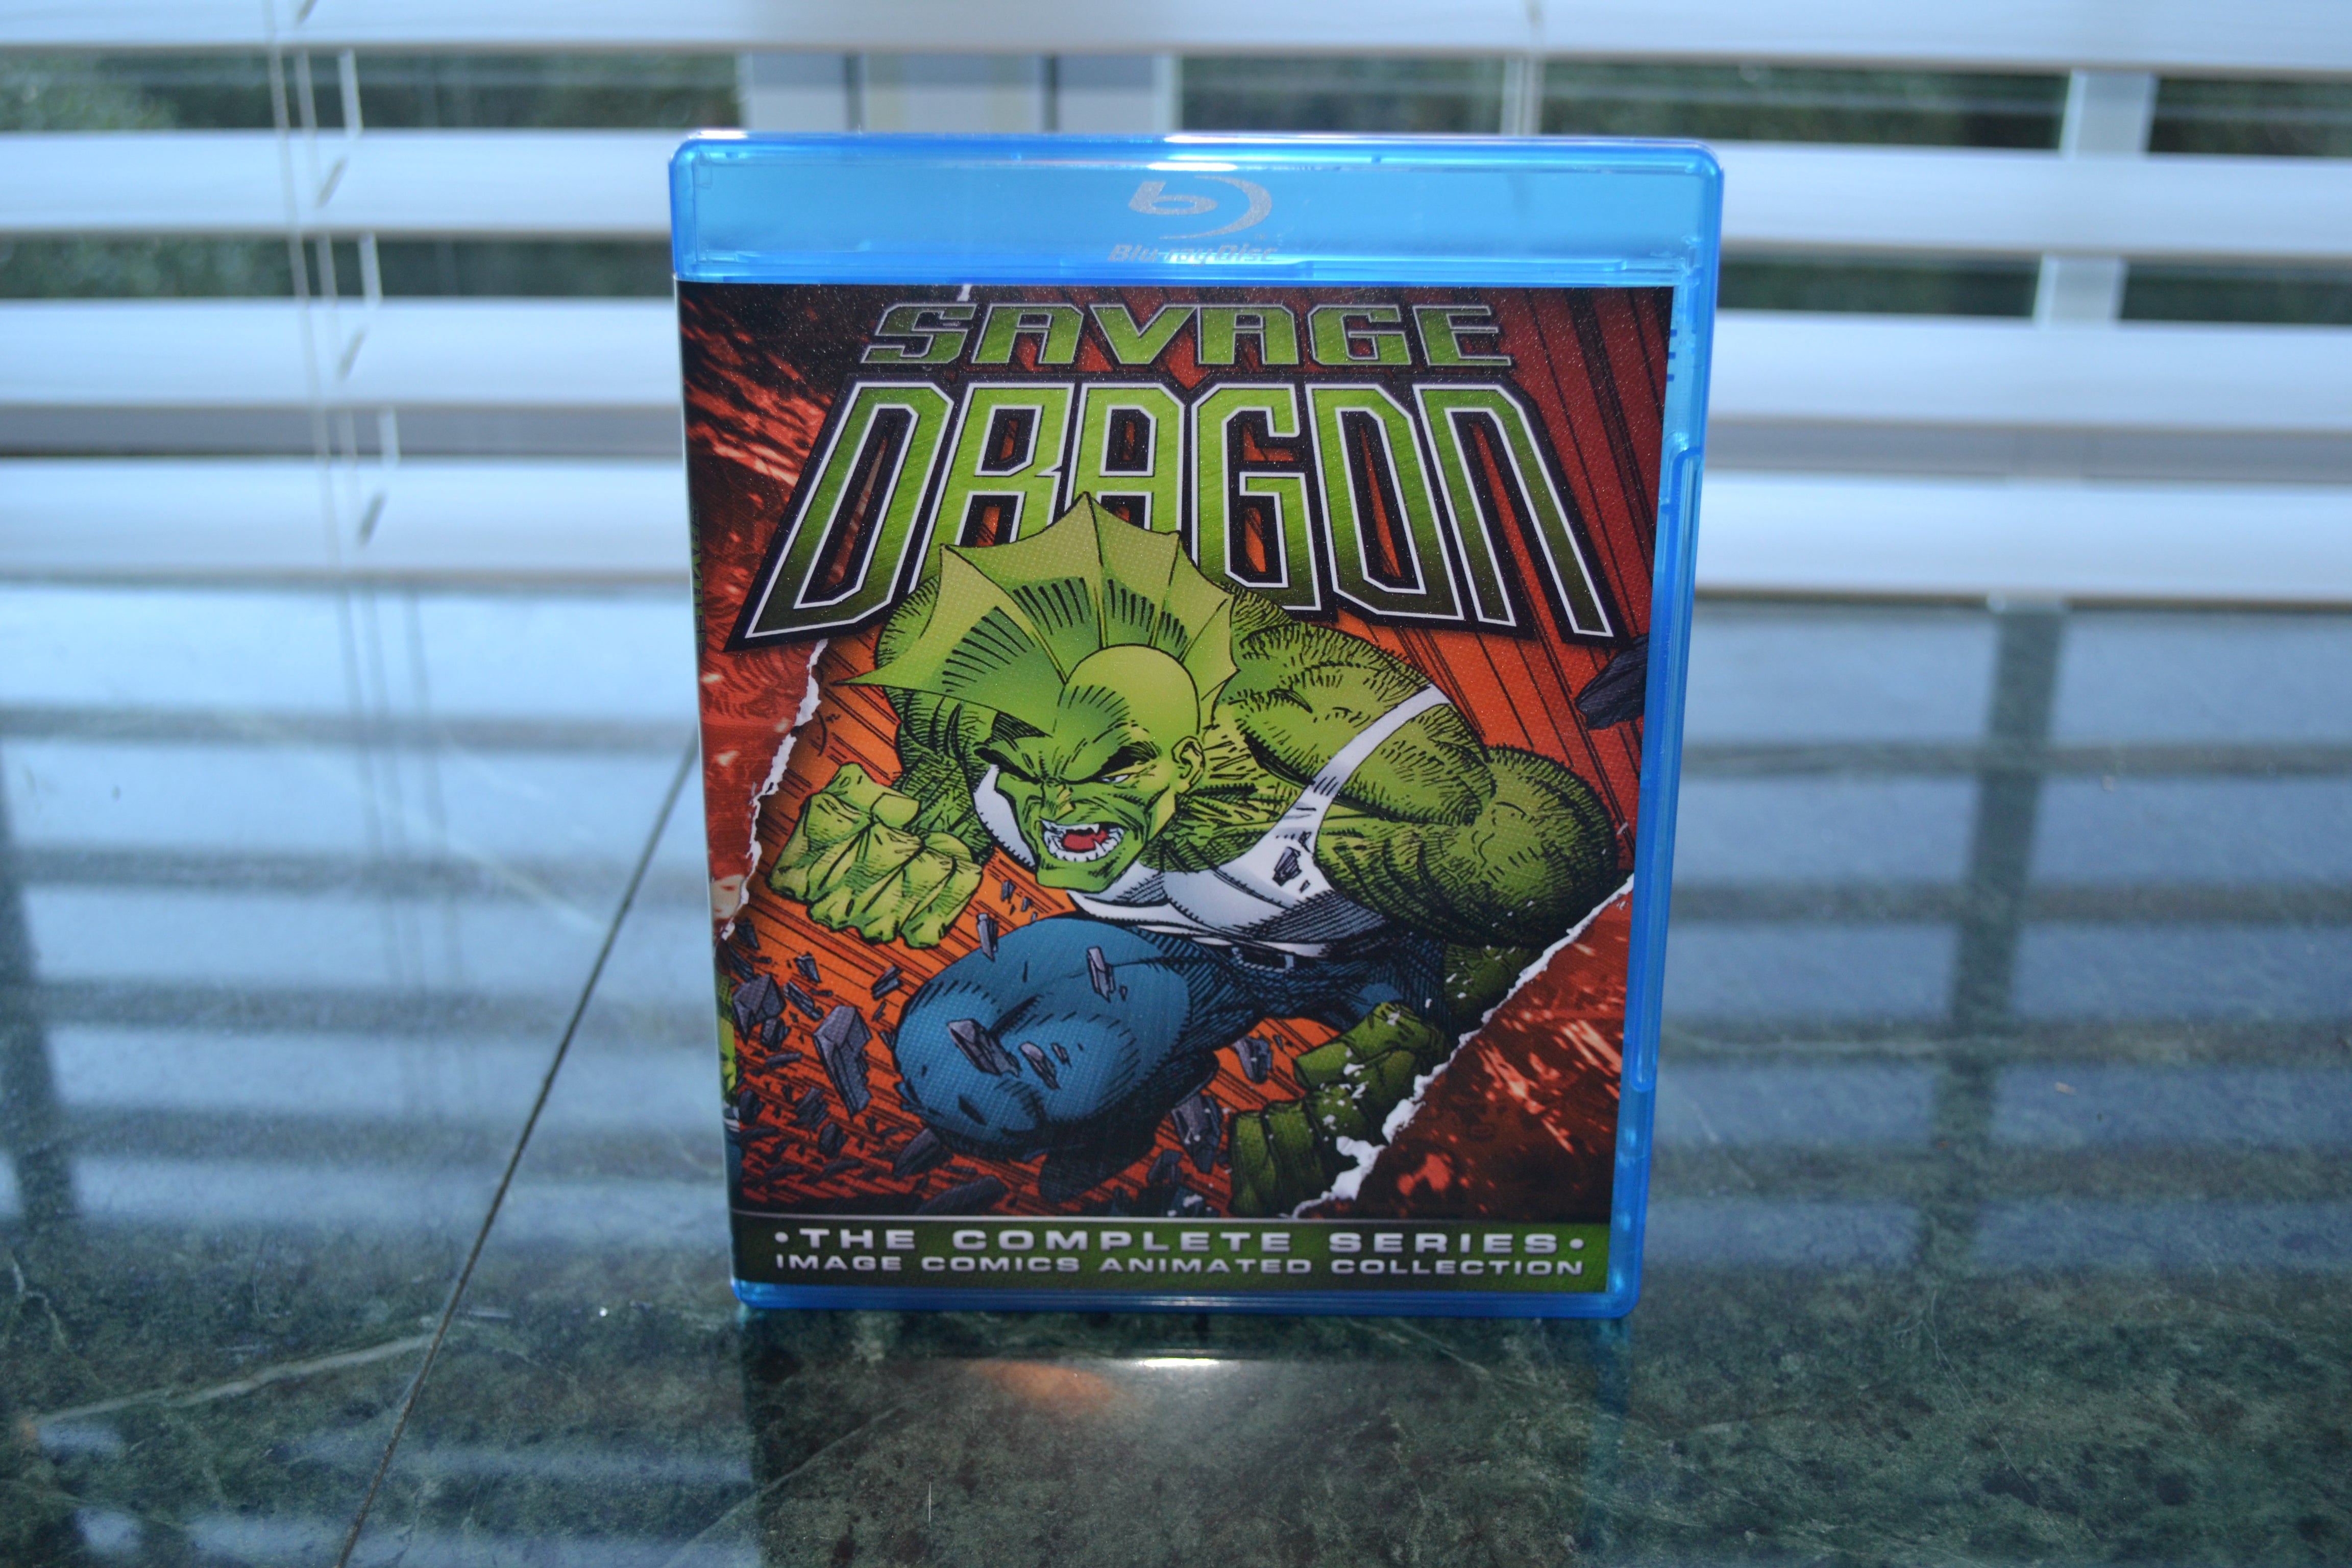 The Savage Dragon The Complete Series Blu-ray Set